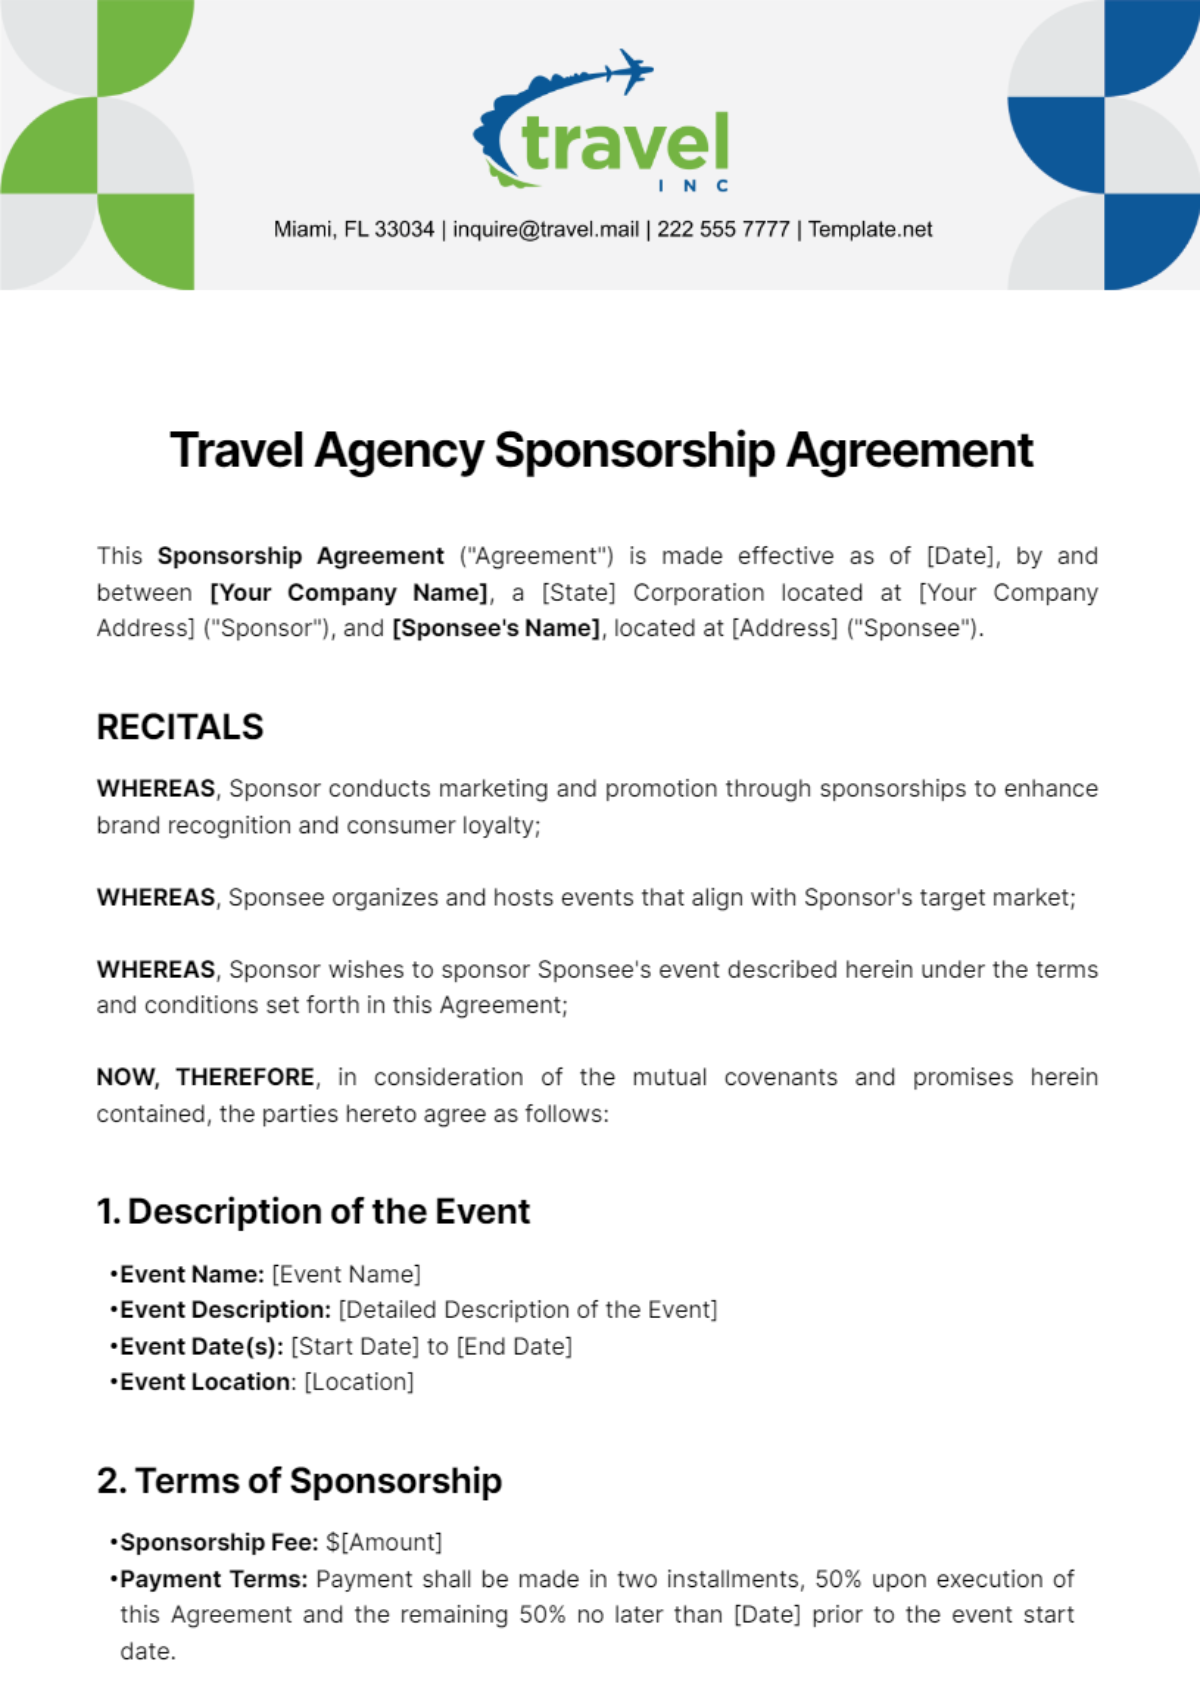 Free Travel Agency Sponsorship Agreement Template